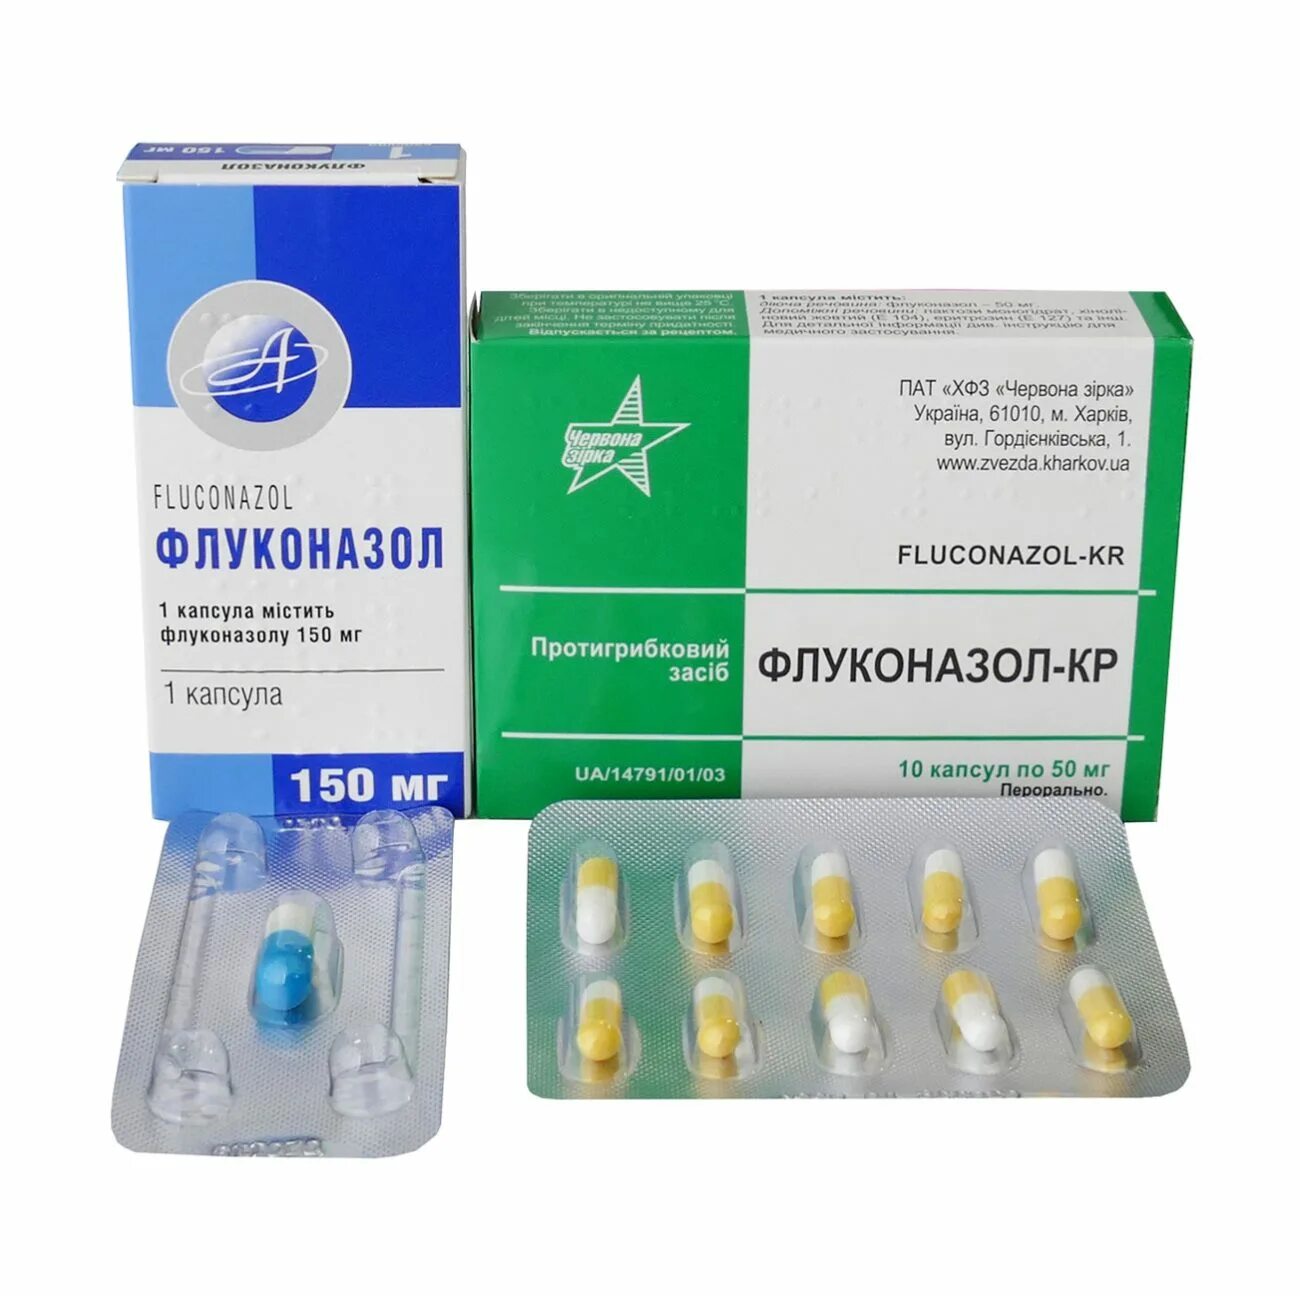 Флуконазол капсулы 400 мг. Таблетки от молочницы флуконазол 150. Капсула от молочницы флуконазол 150. Противогрибковые капсулы флуконазол. Противогрибковые при молочнице